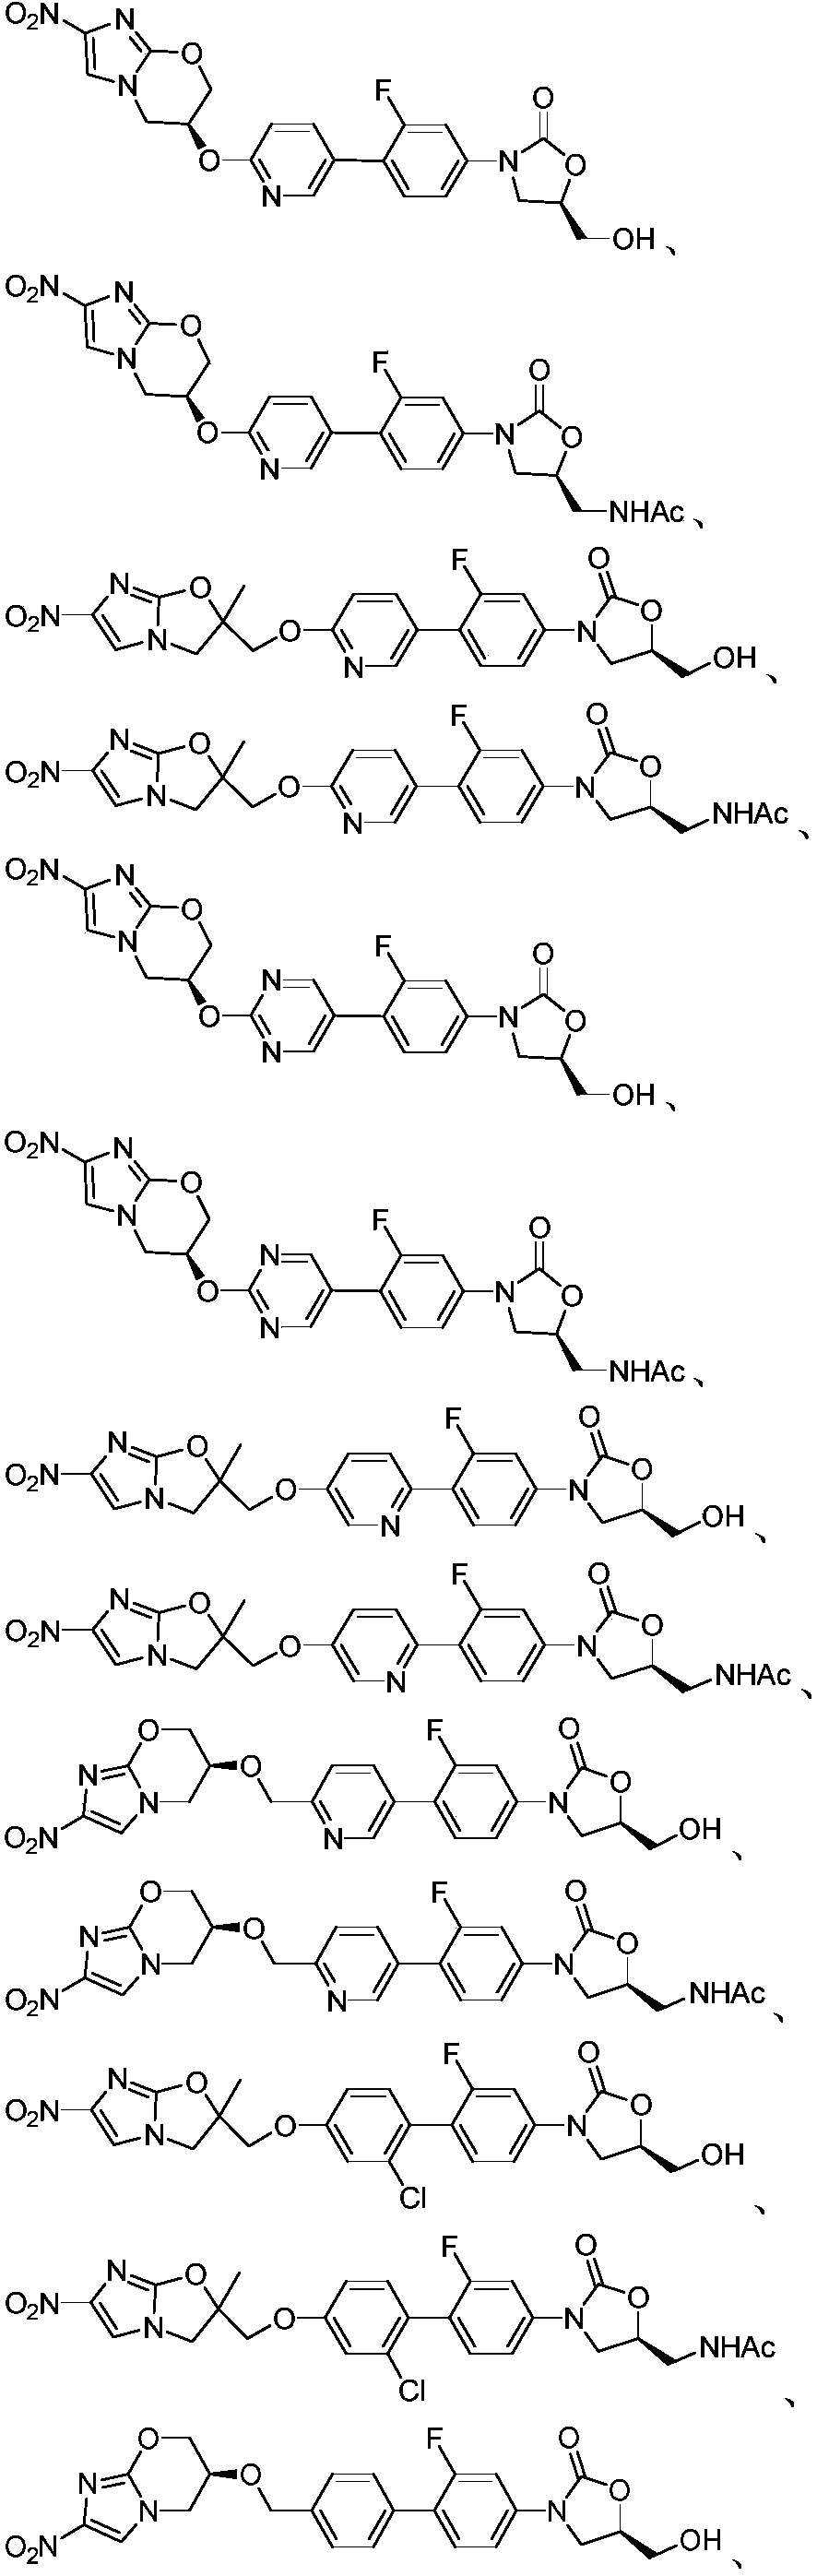 Application of oxazolidone-nitroimidazole coupling molecule